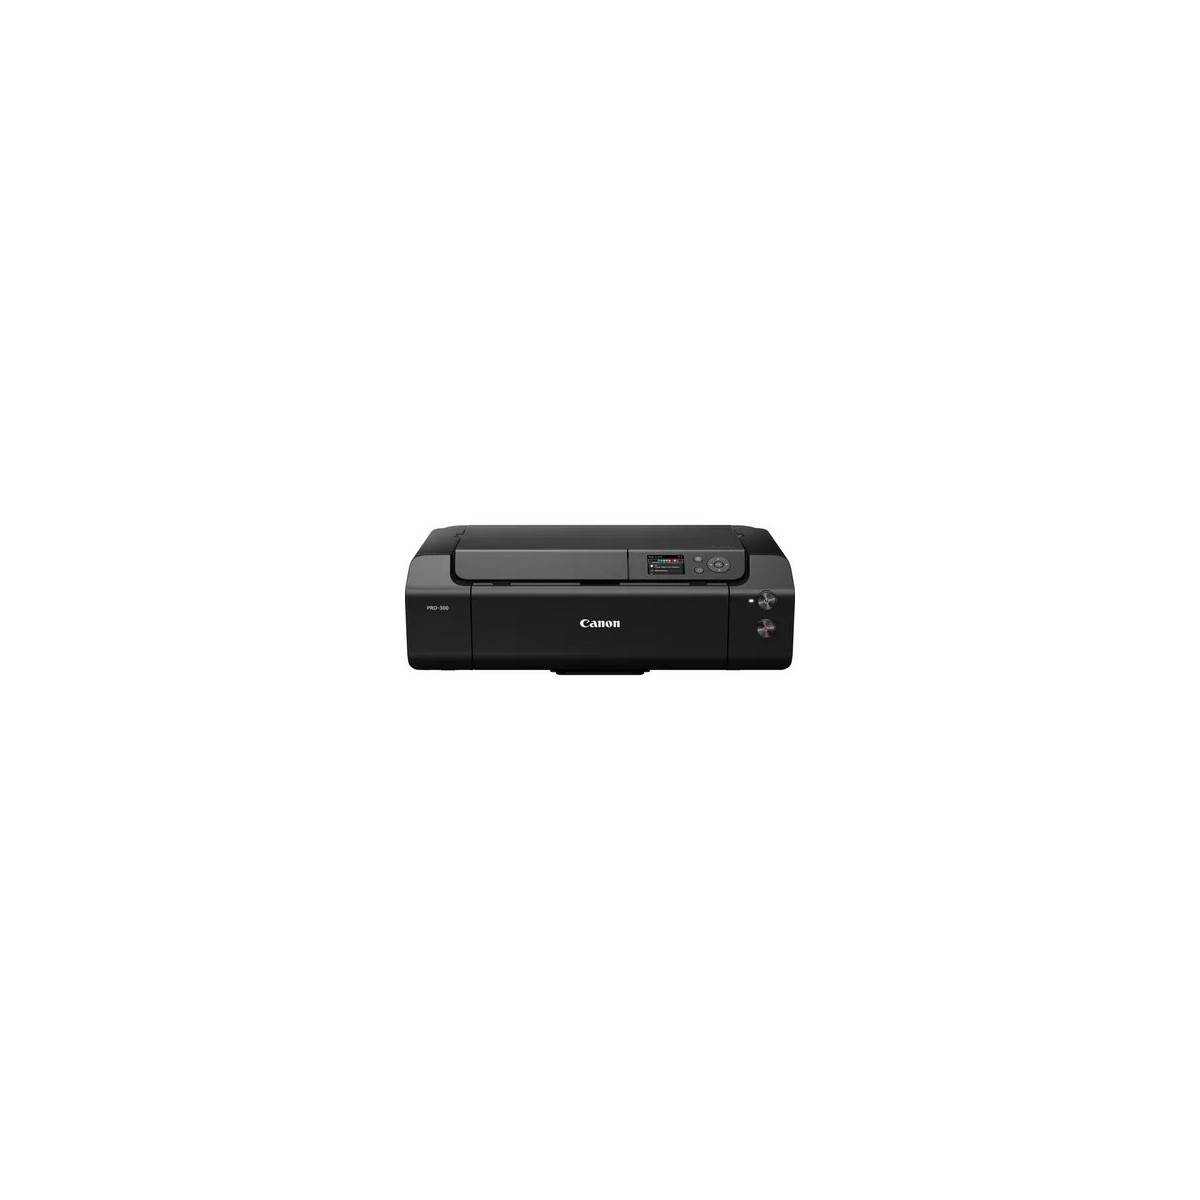 Canon imagePROGRAF PRO-300 - 4800 x 2400 DPI - 13" x 19" (33x48 cm) - Borderless printing - Wi-Fi - Direct printing - Black